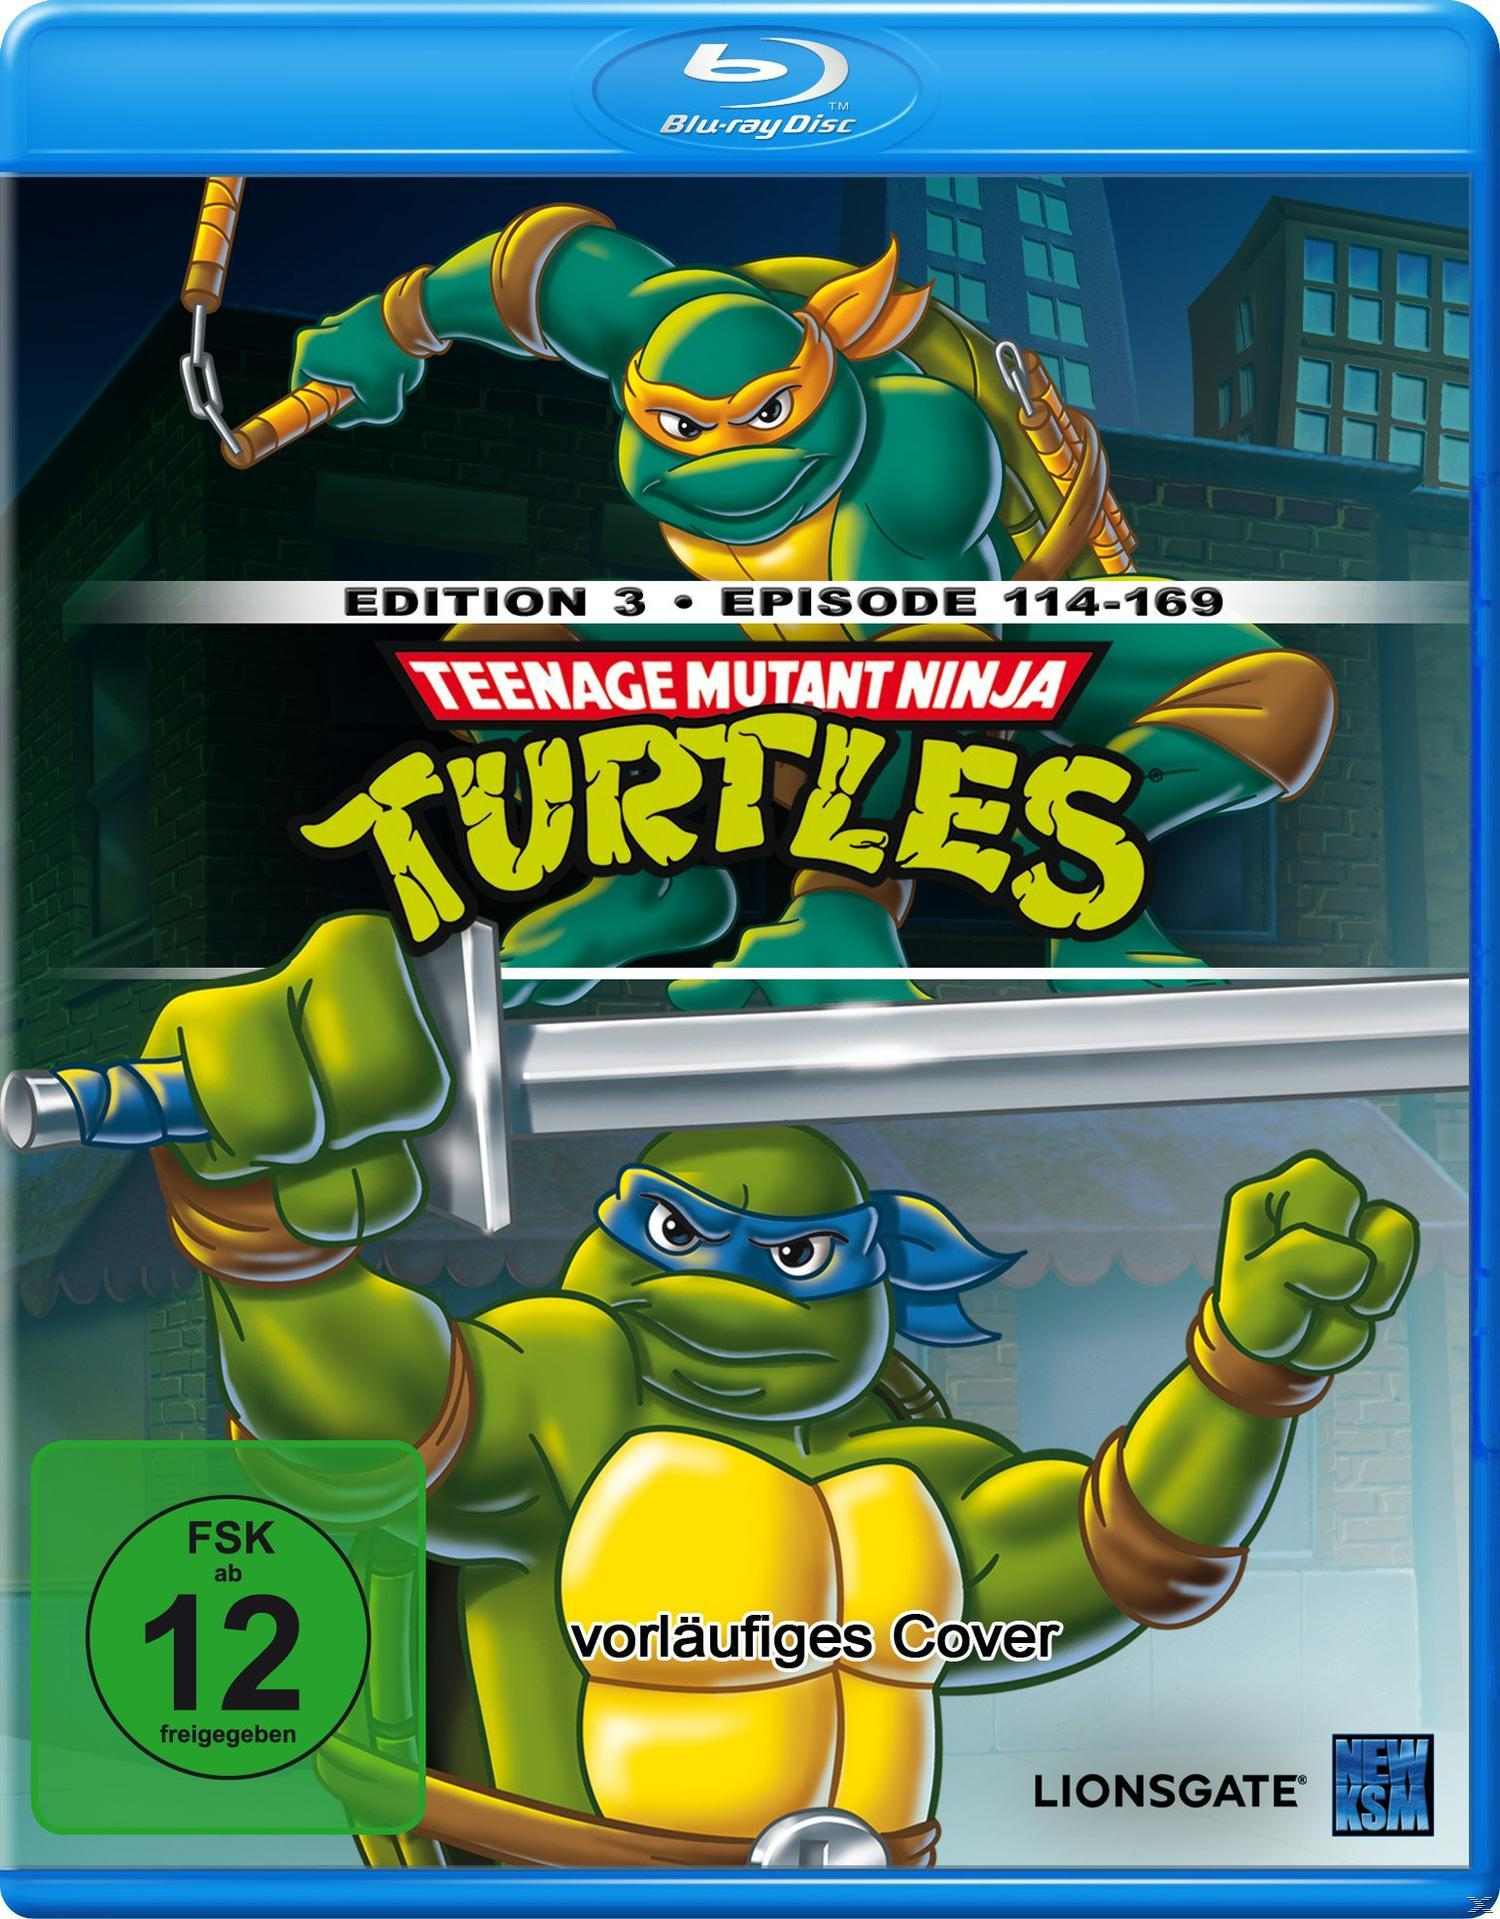 Blu-ray Ninja - Episoden Turtles Mutant Teenage 114 -169